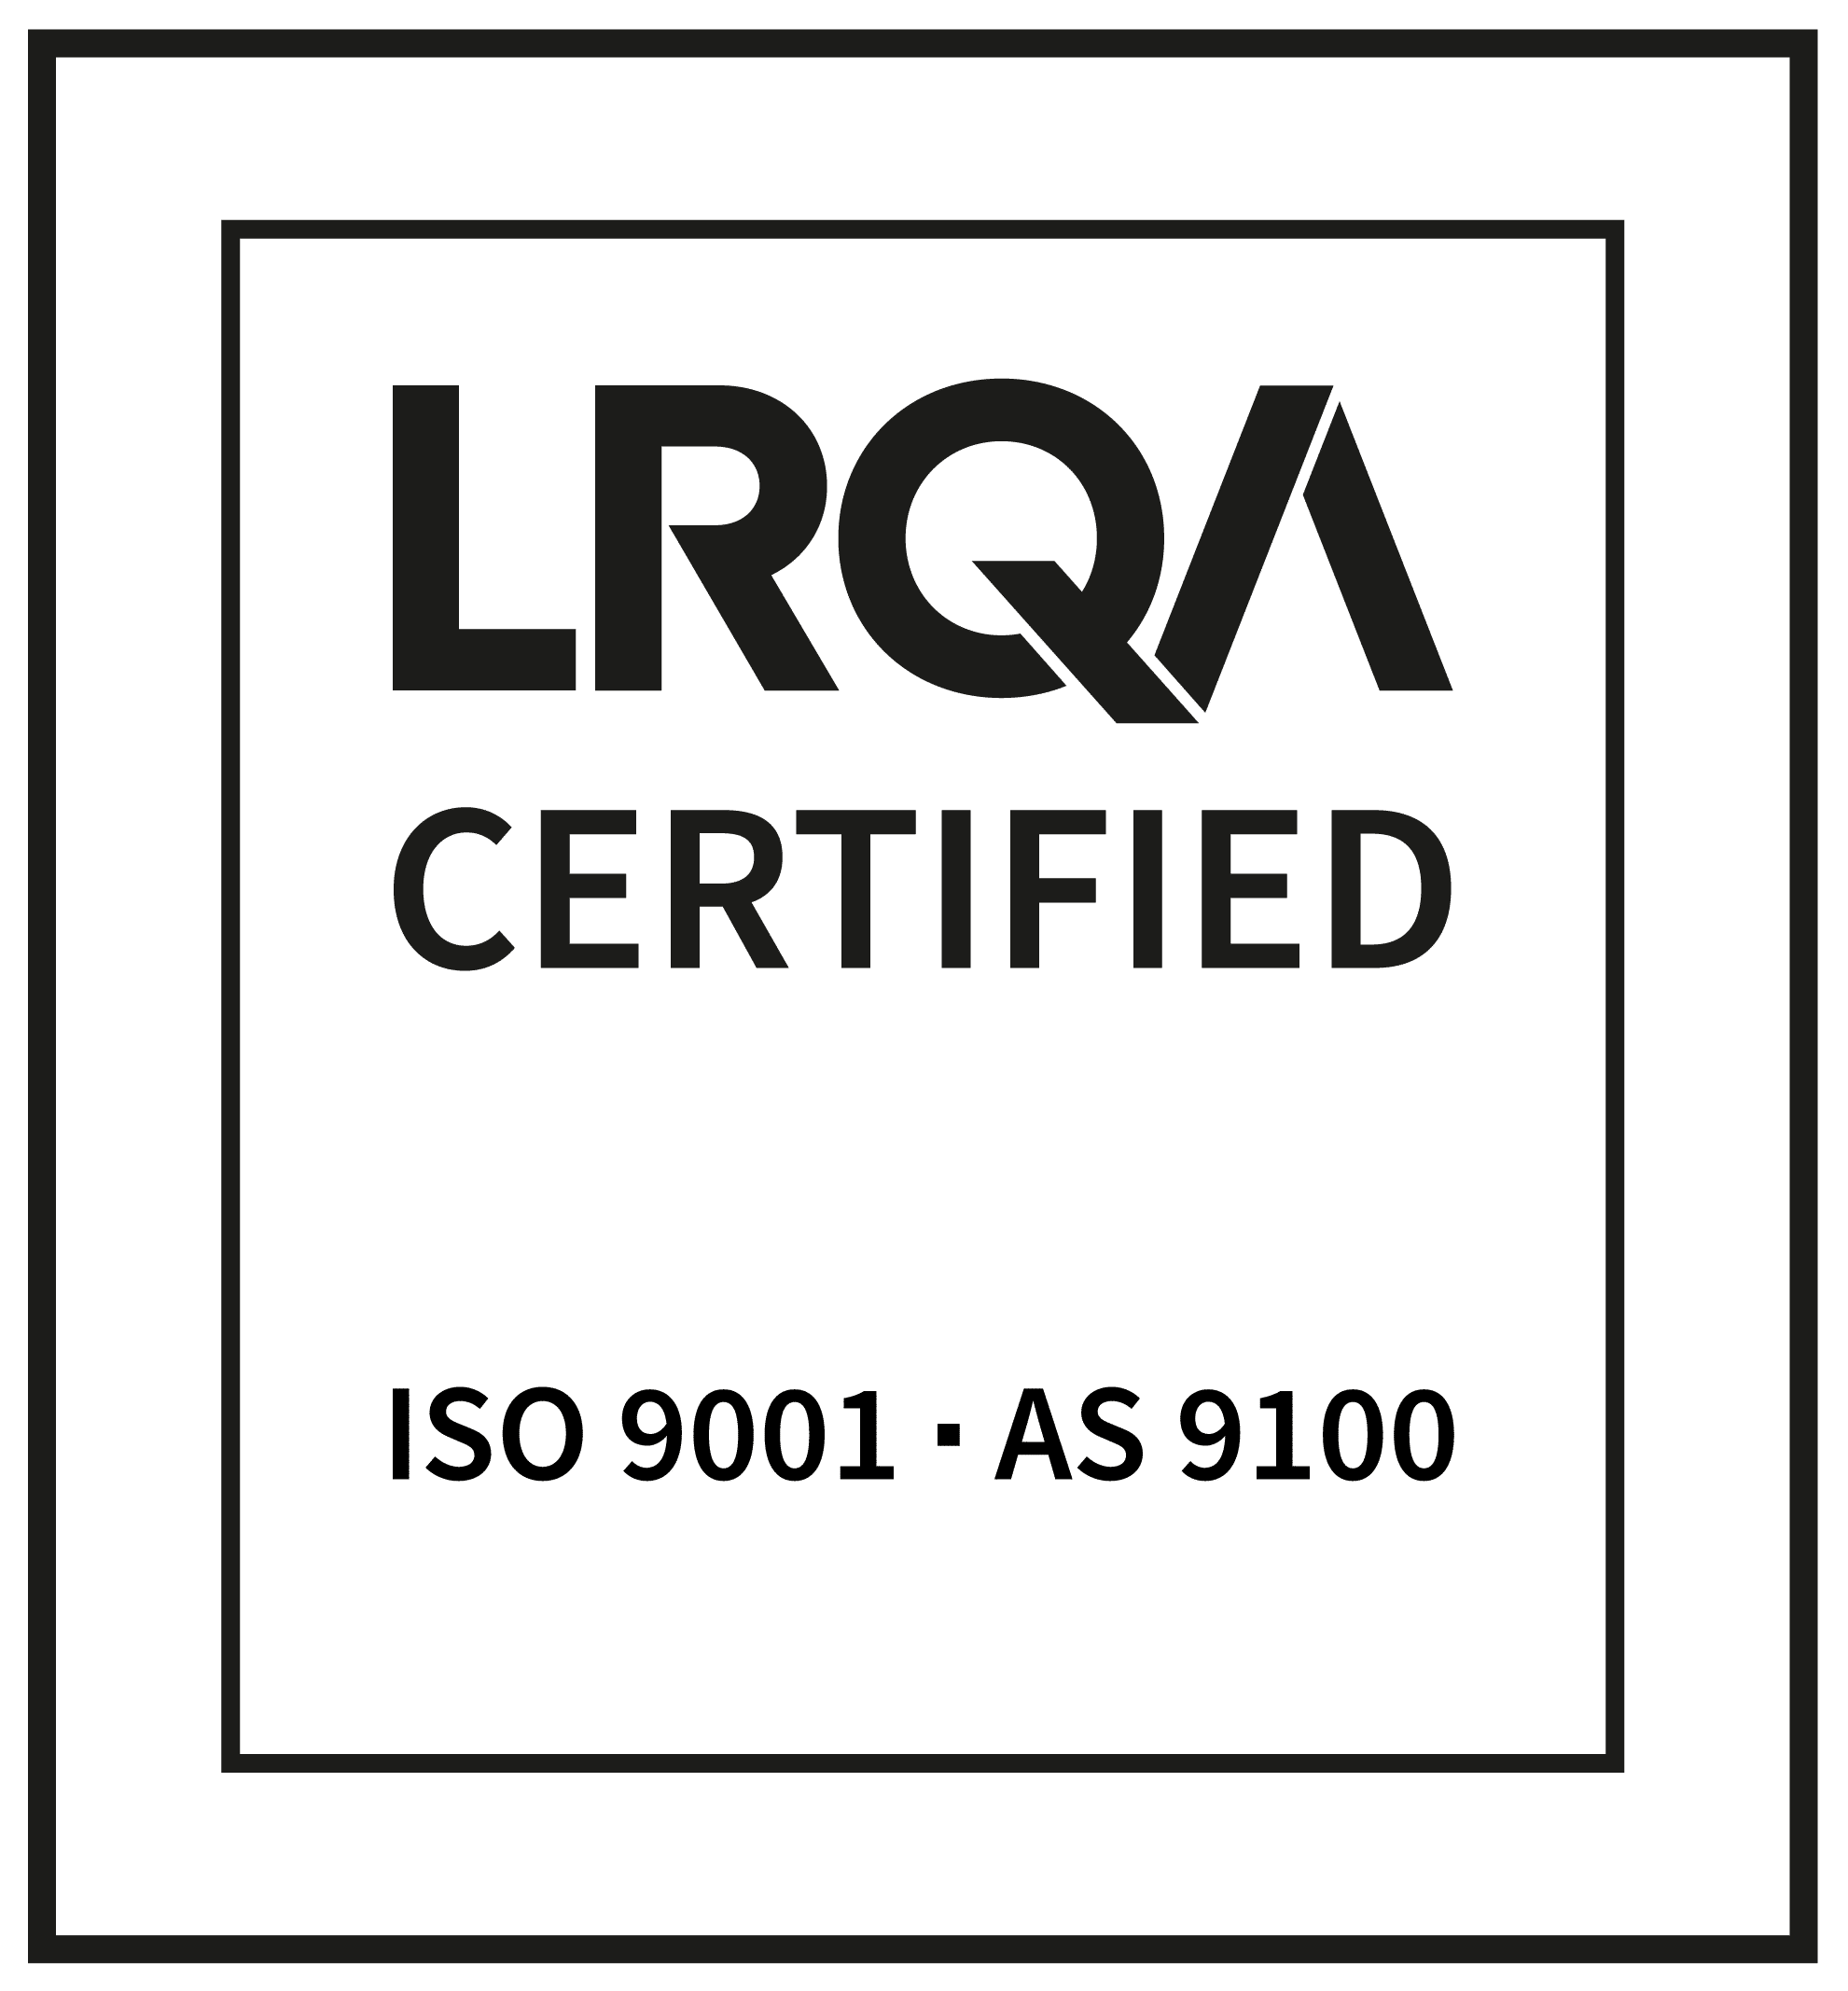 Le logo LRQA ISO9001 et AS9100